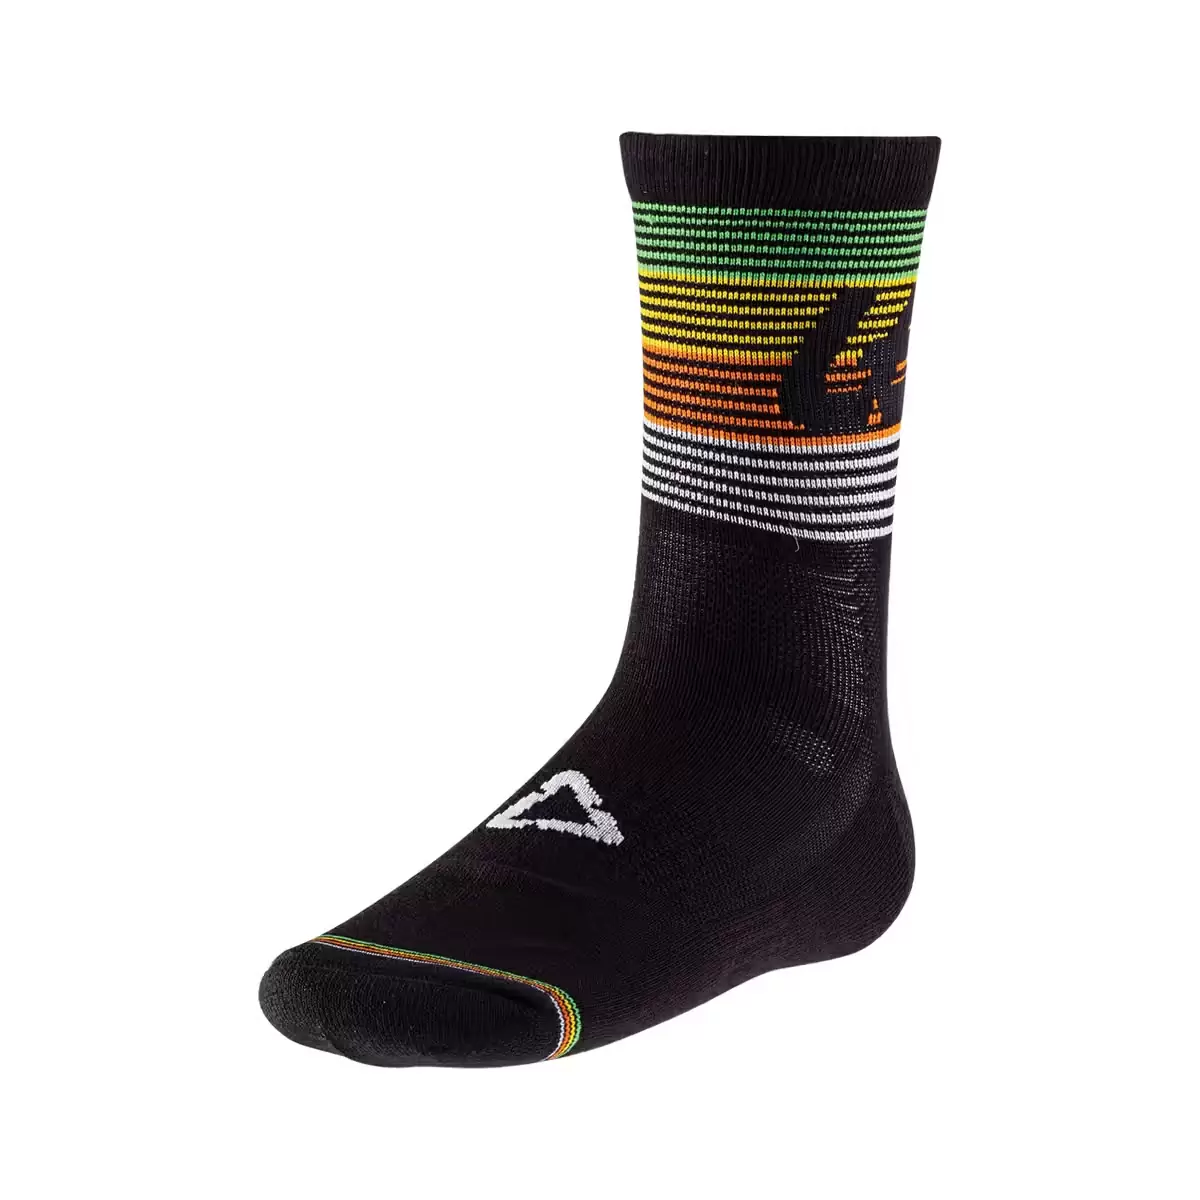 Reinforced Mtb Socks Black Size S/M (38-42) - image